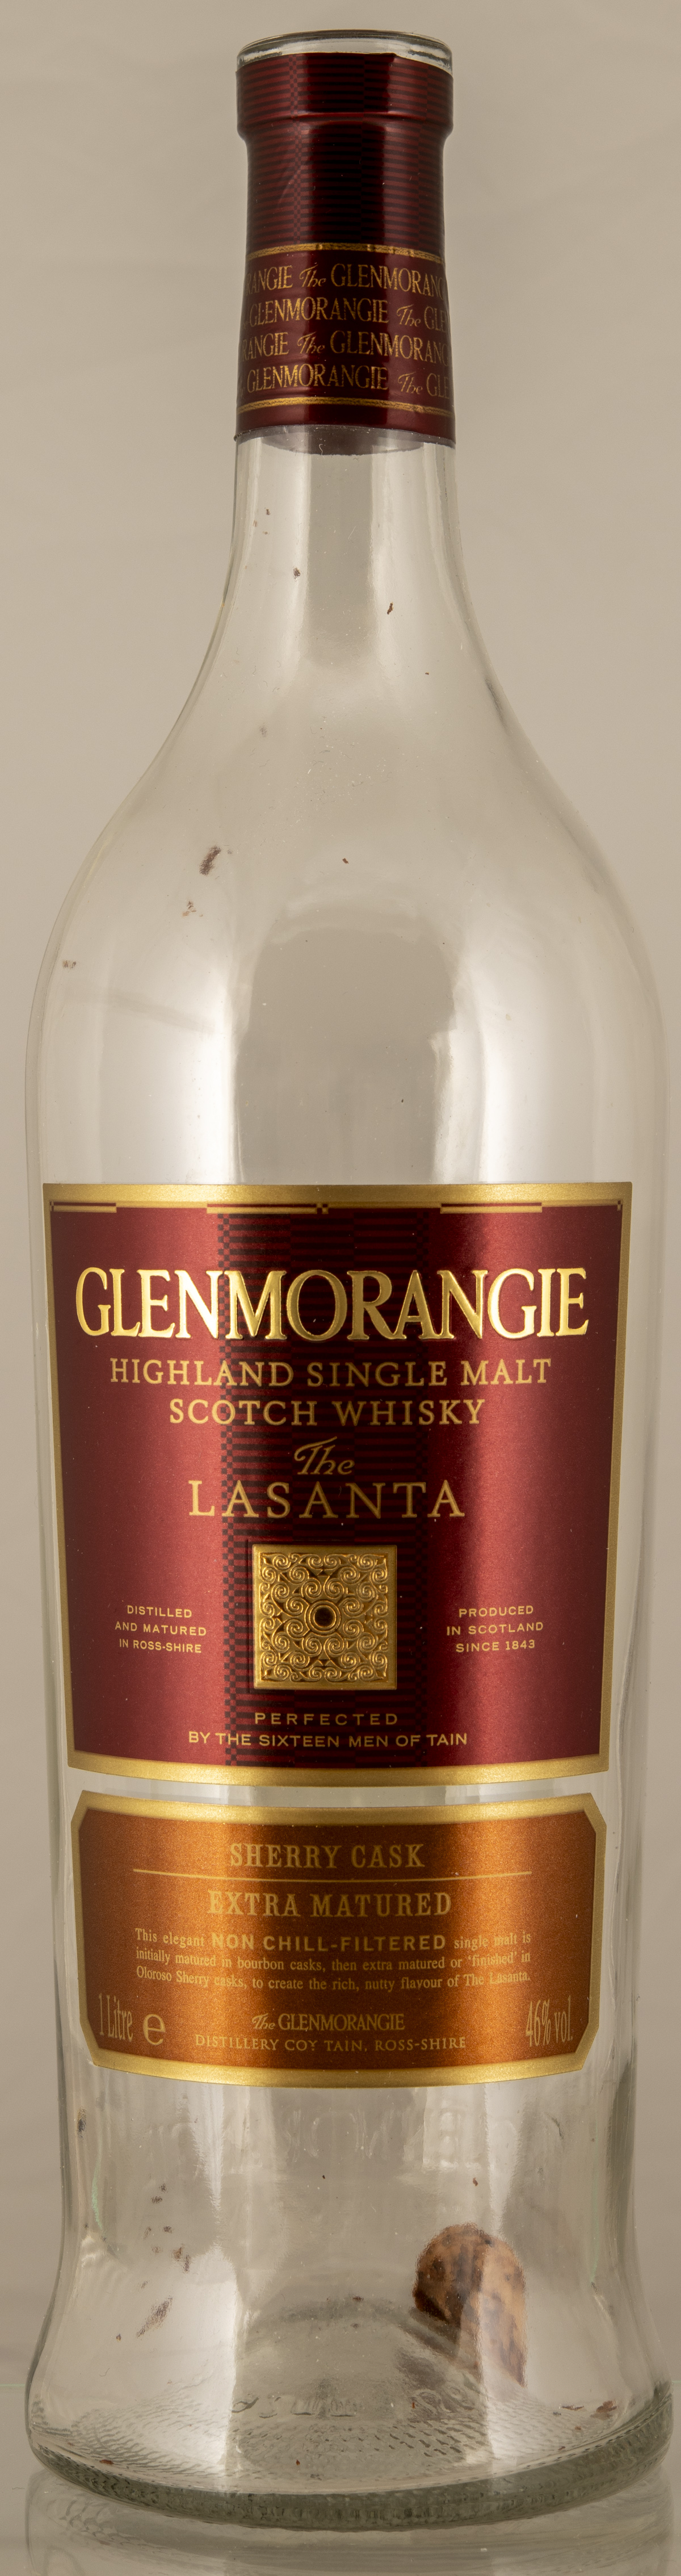 Billede: D85_8404 - Glenmorangie Lasanta - bottle front.jpg